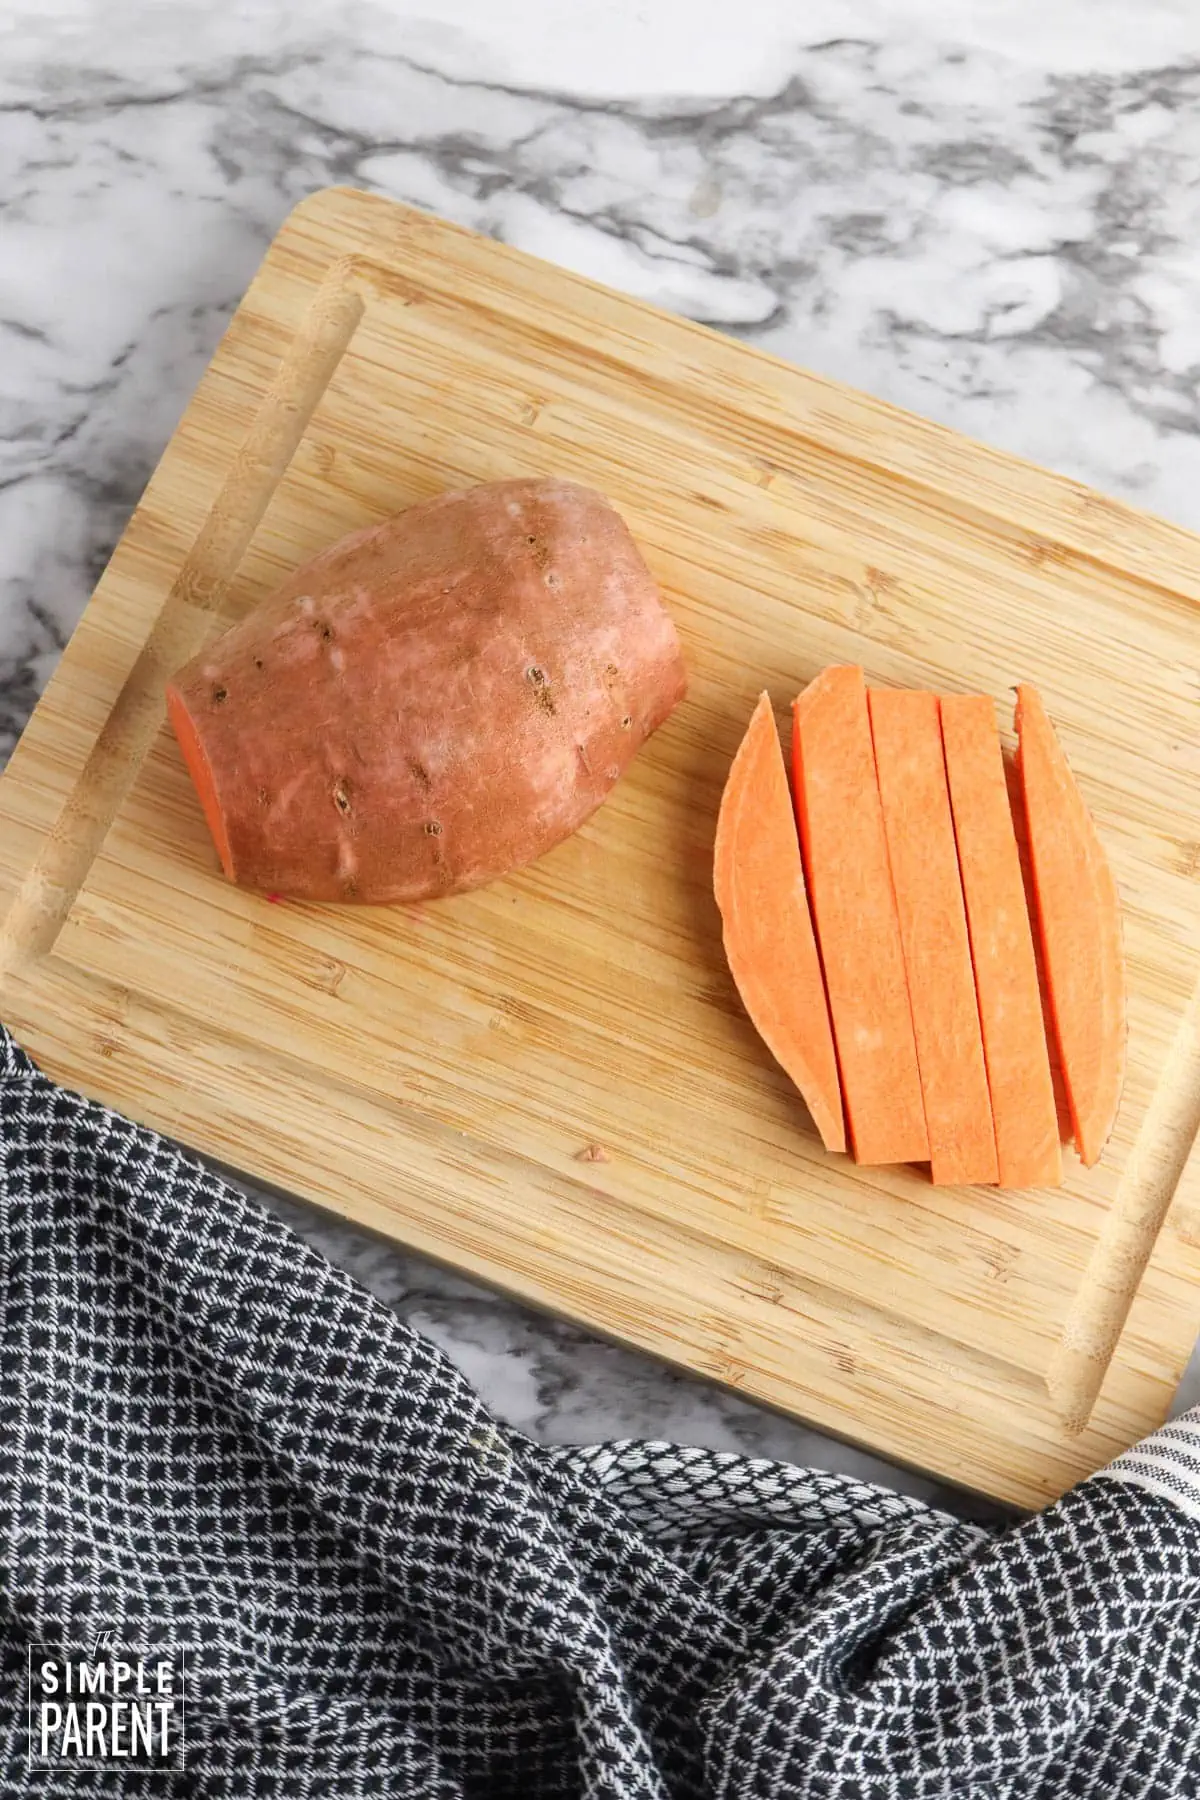 Sweet potato on wooden cutting board